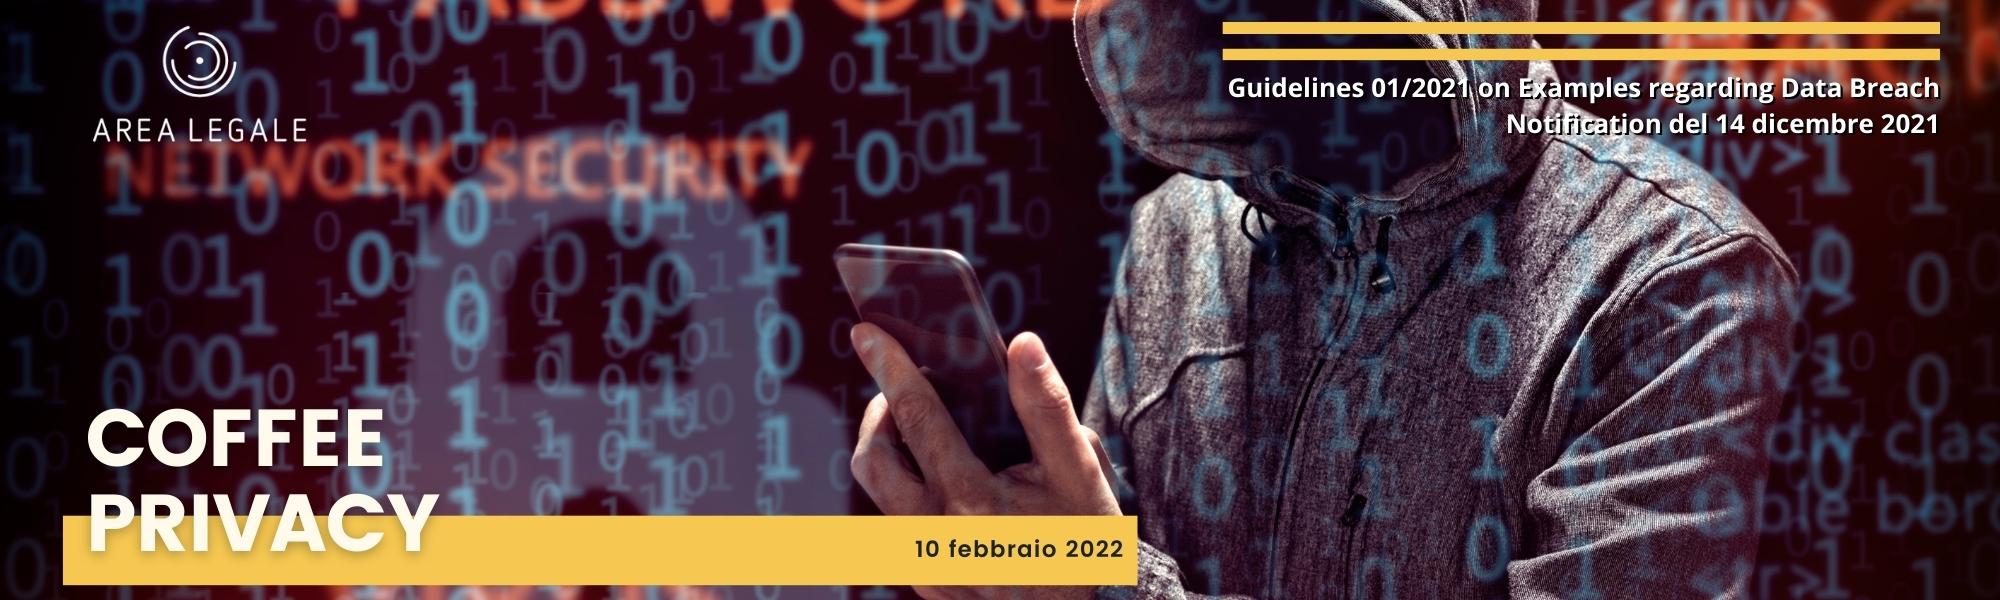 Guidelines 01/2021 on Examples regarding Data Breach Notification del 14 dicembre 2021